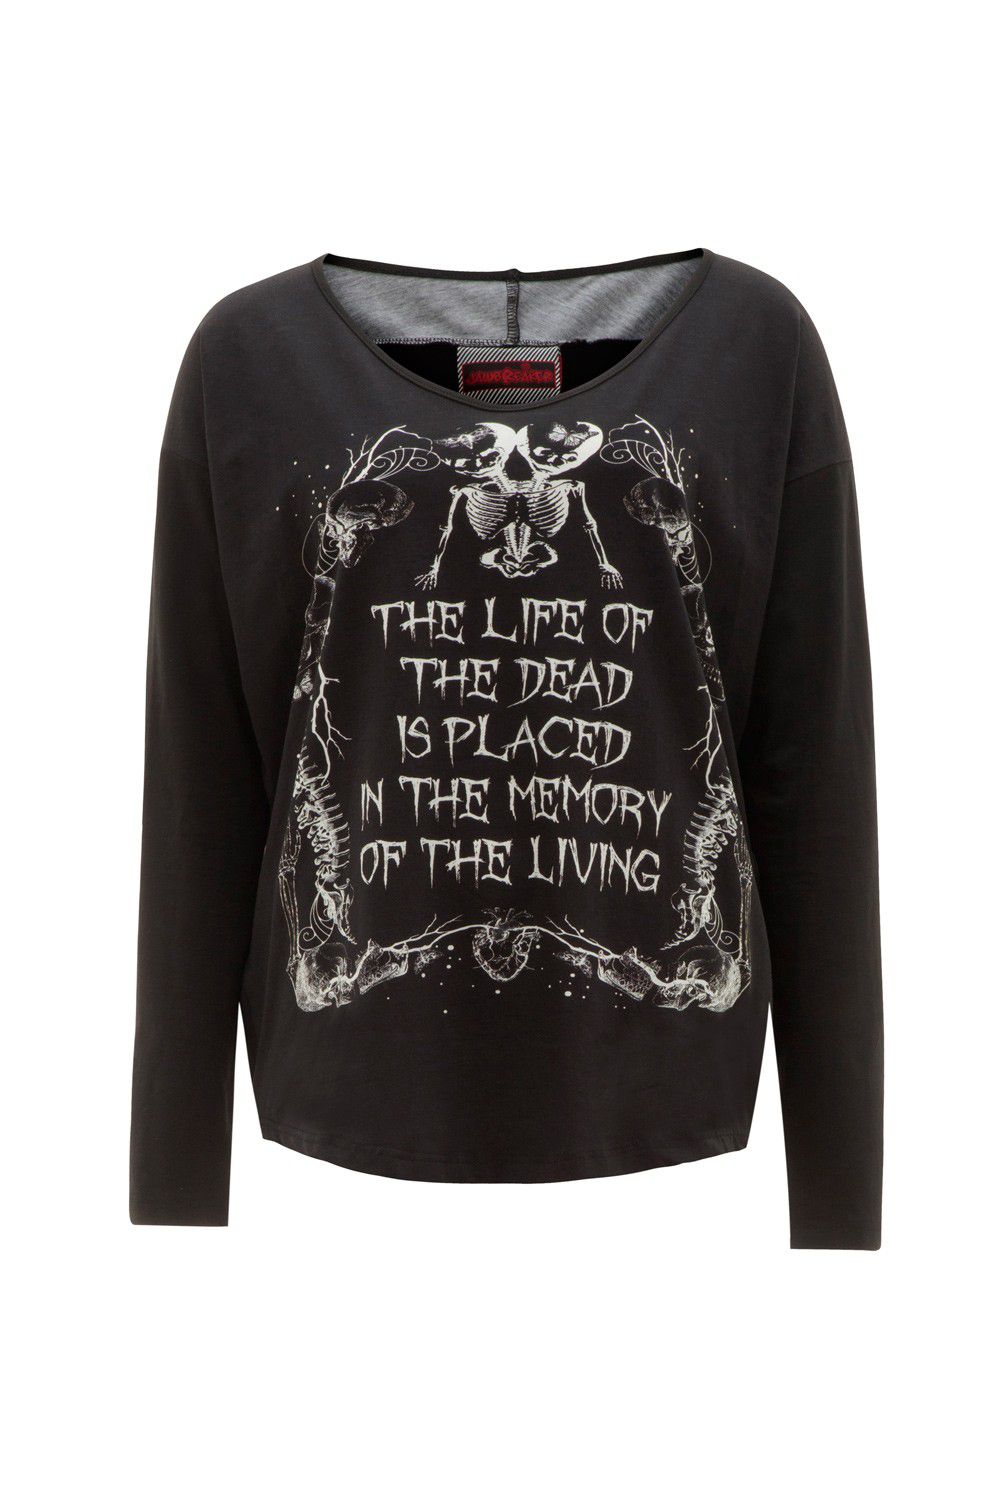 ldsta2616bb_top-tee-shirt-gothique-rock-skull-death